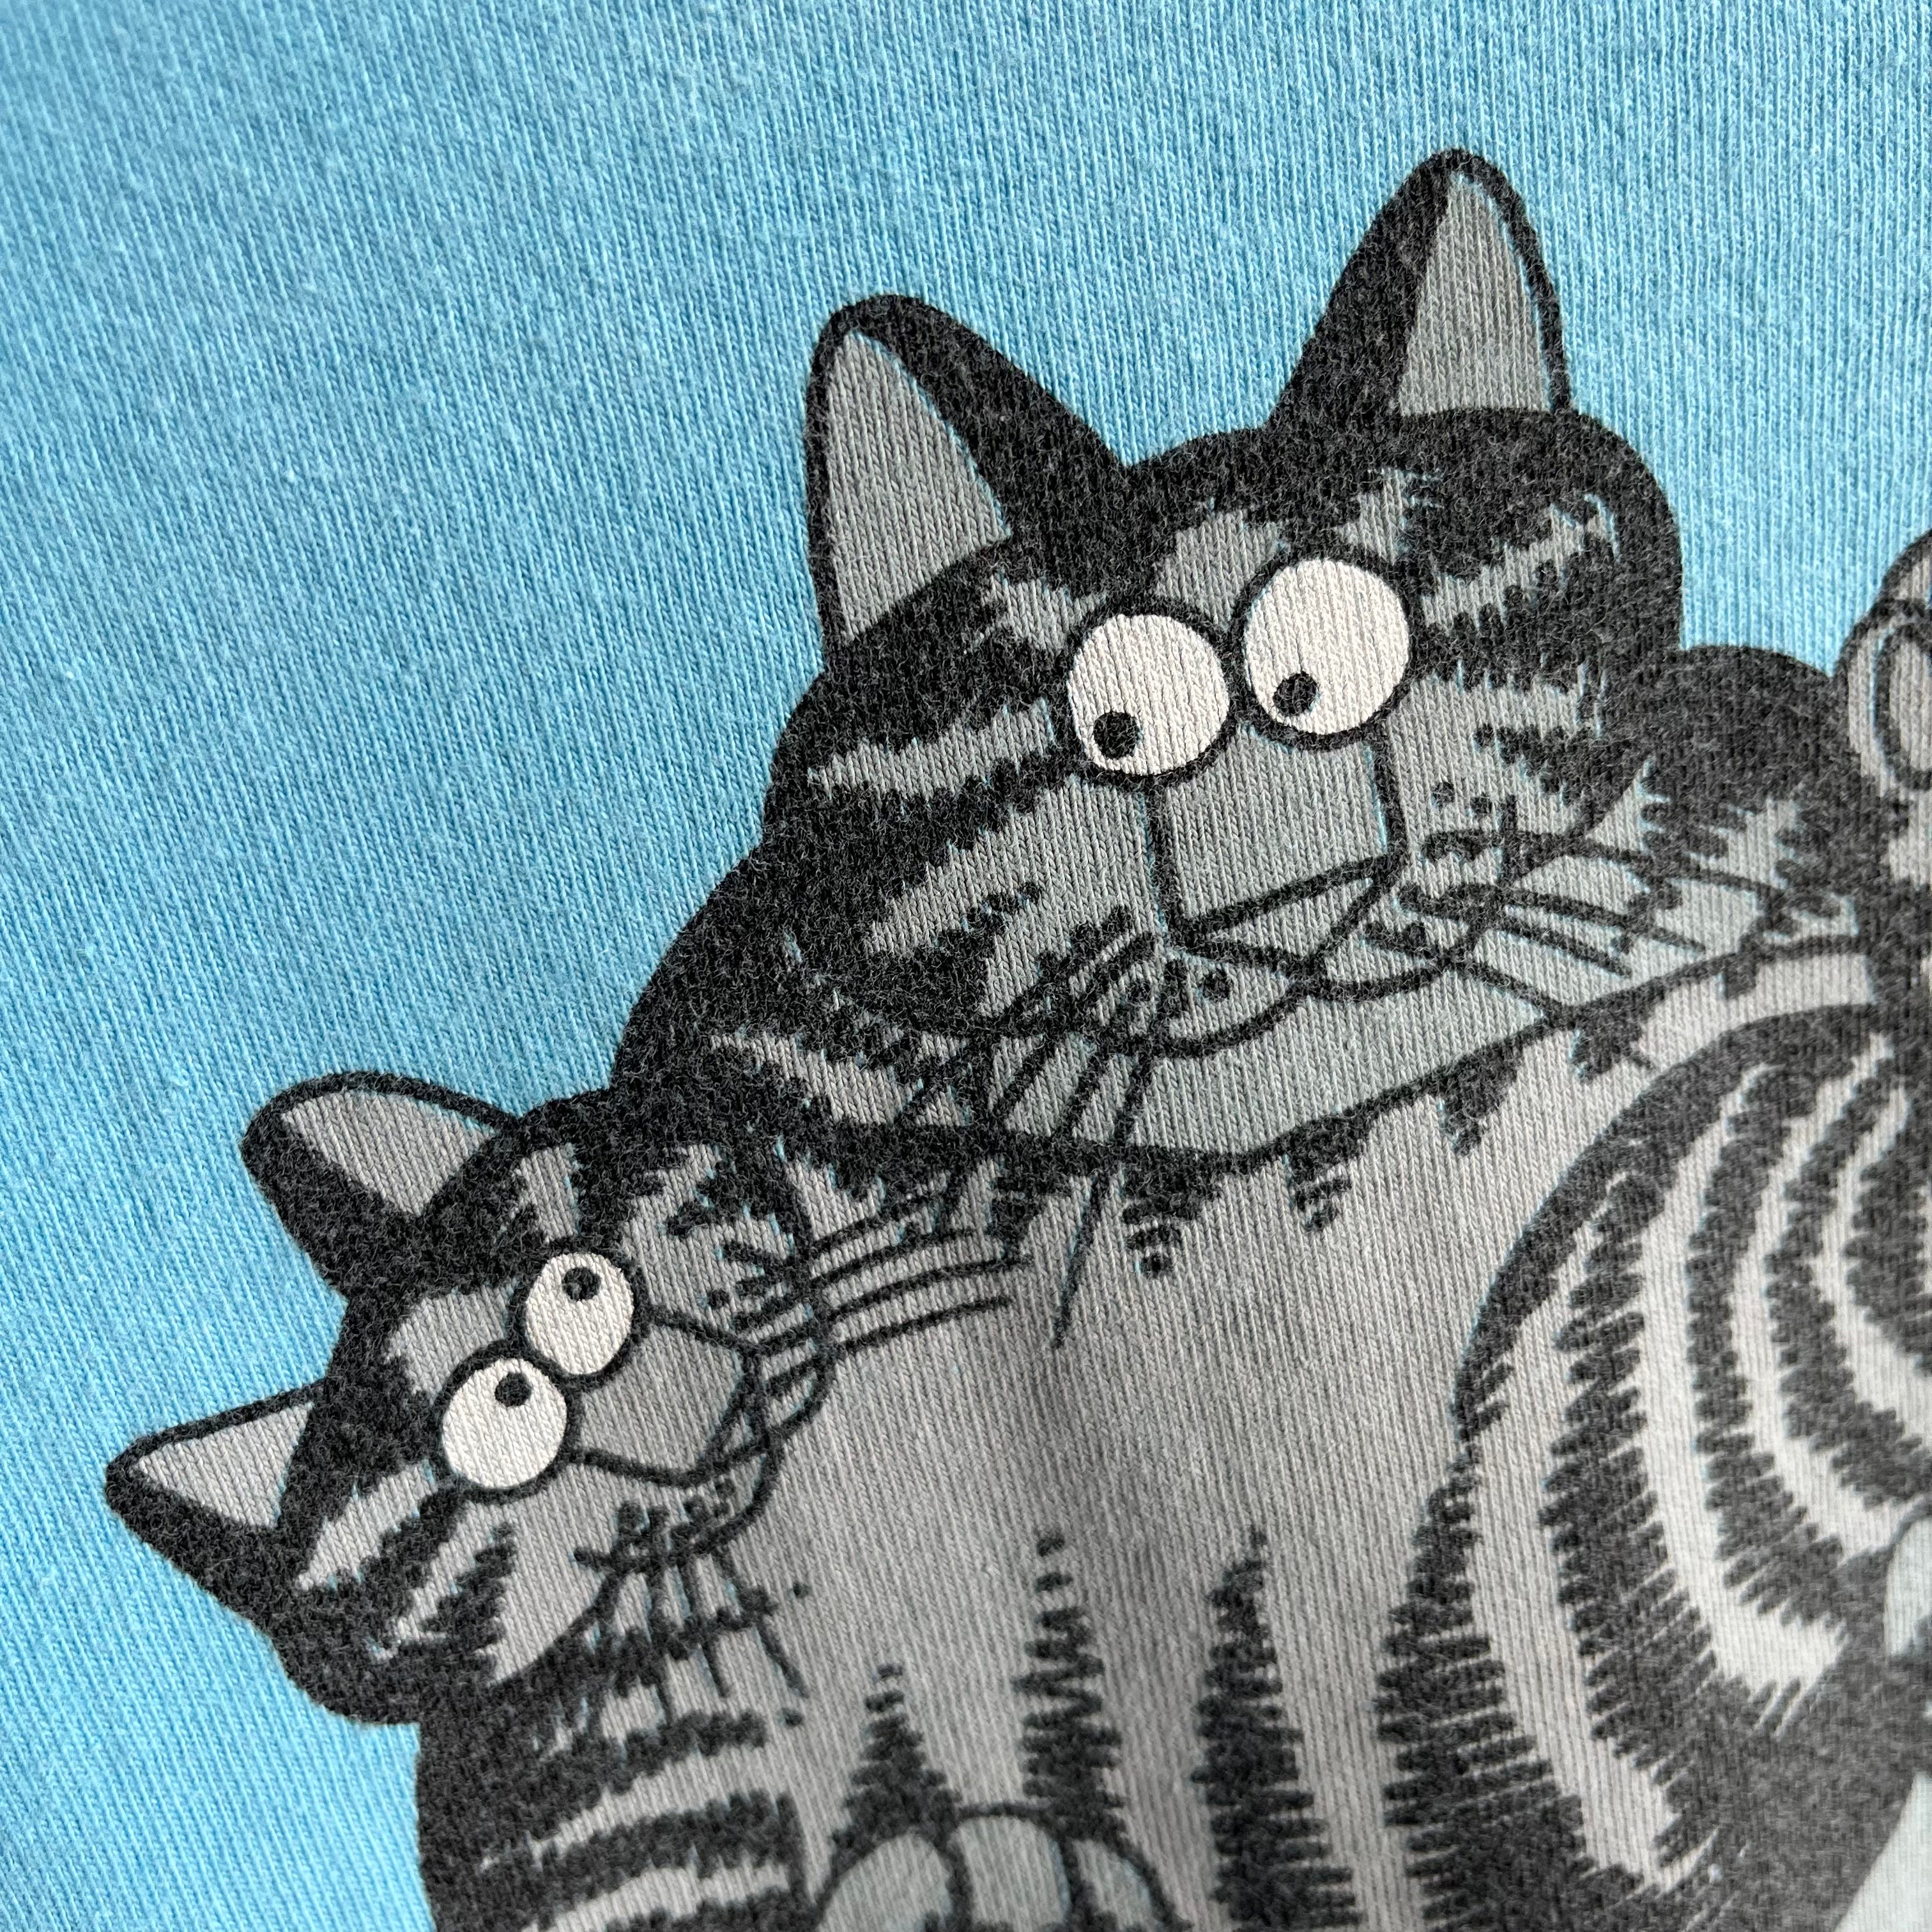 1970s Hawaiian Humane Society Adopt-A-Cat Front and Back T-Shirt